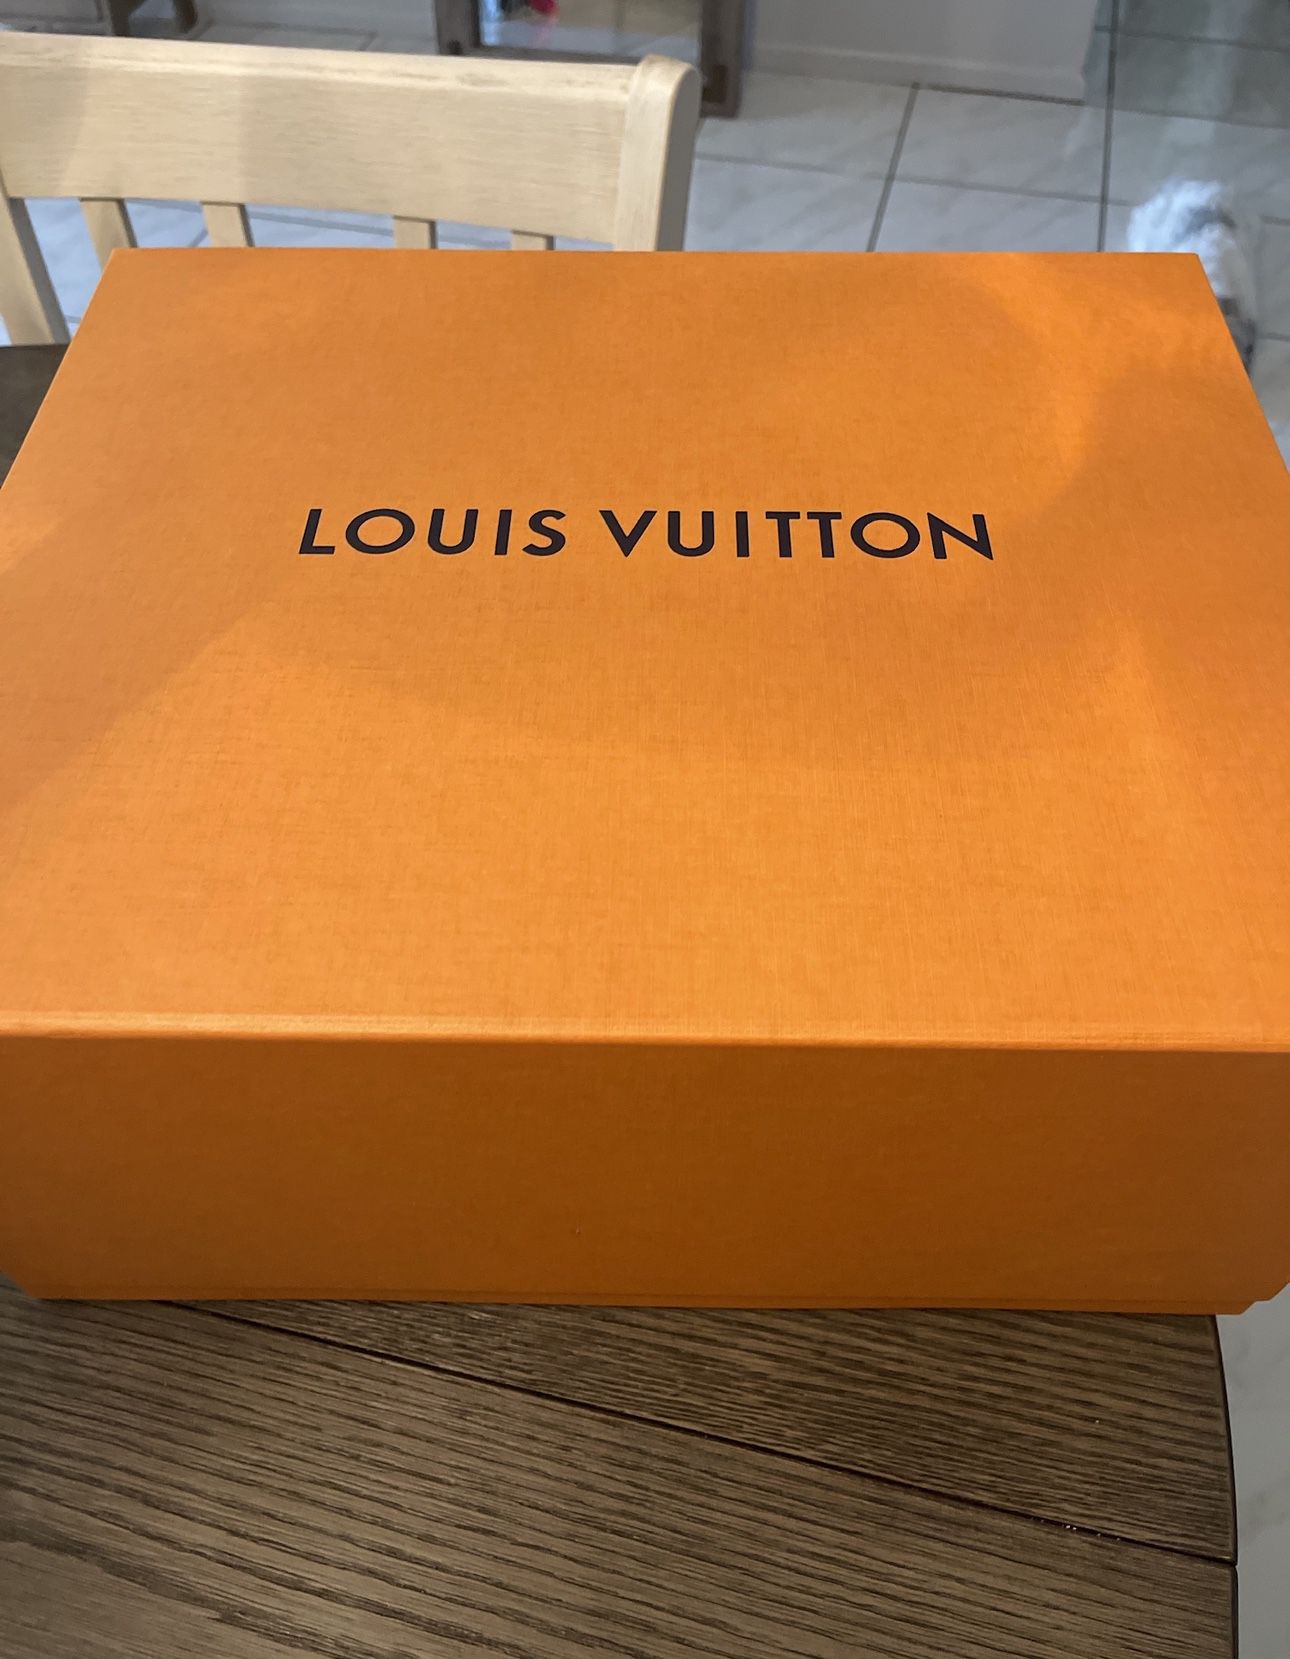 Off White Jordan 1 Louis Vuitton for Sale in Kissimmee, FL - OfferUp